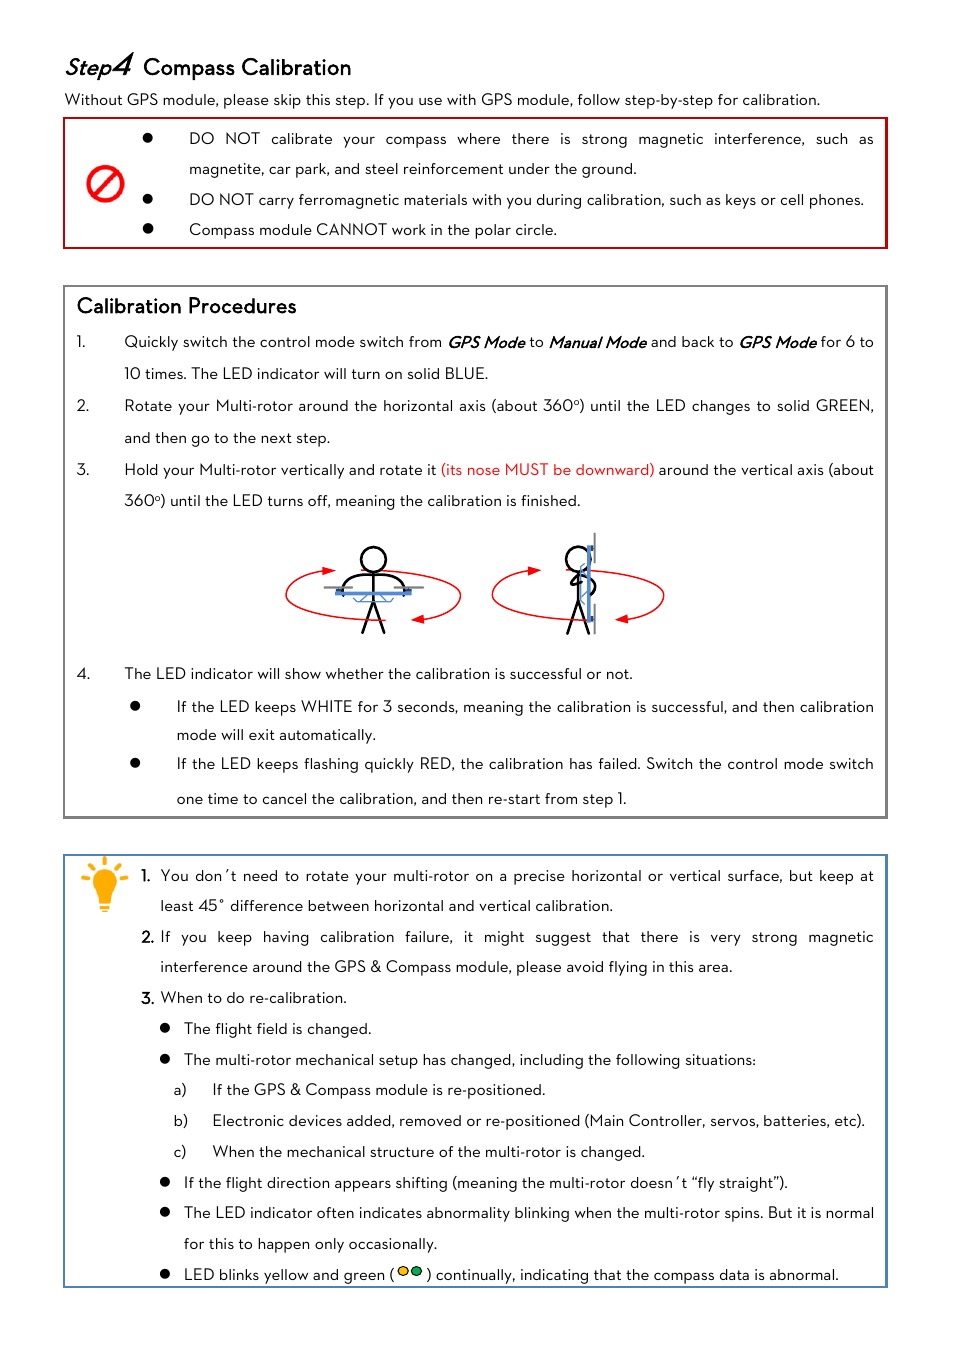 Step4 compass calibration, Ompass, Alibration | DJI WooKong-M User Manual |  Page 8 / 29 | Original mode